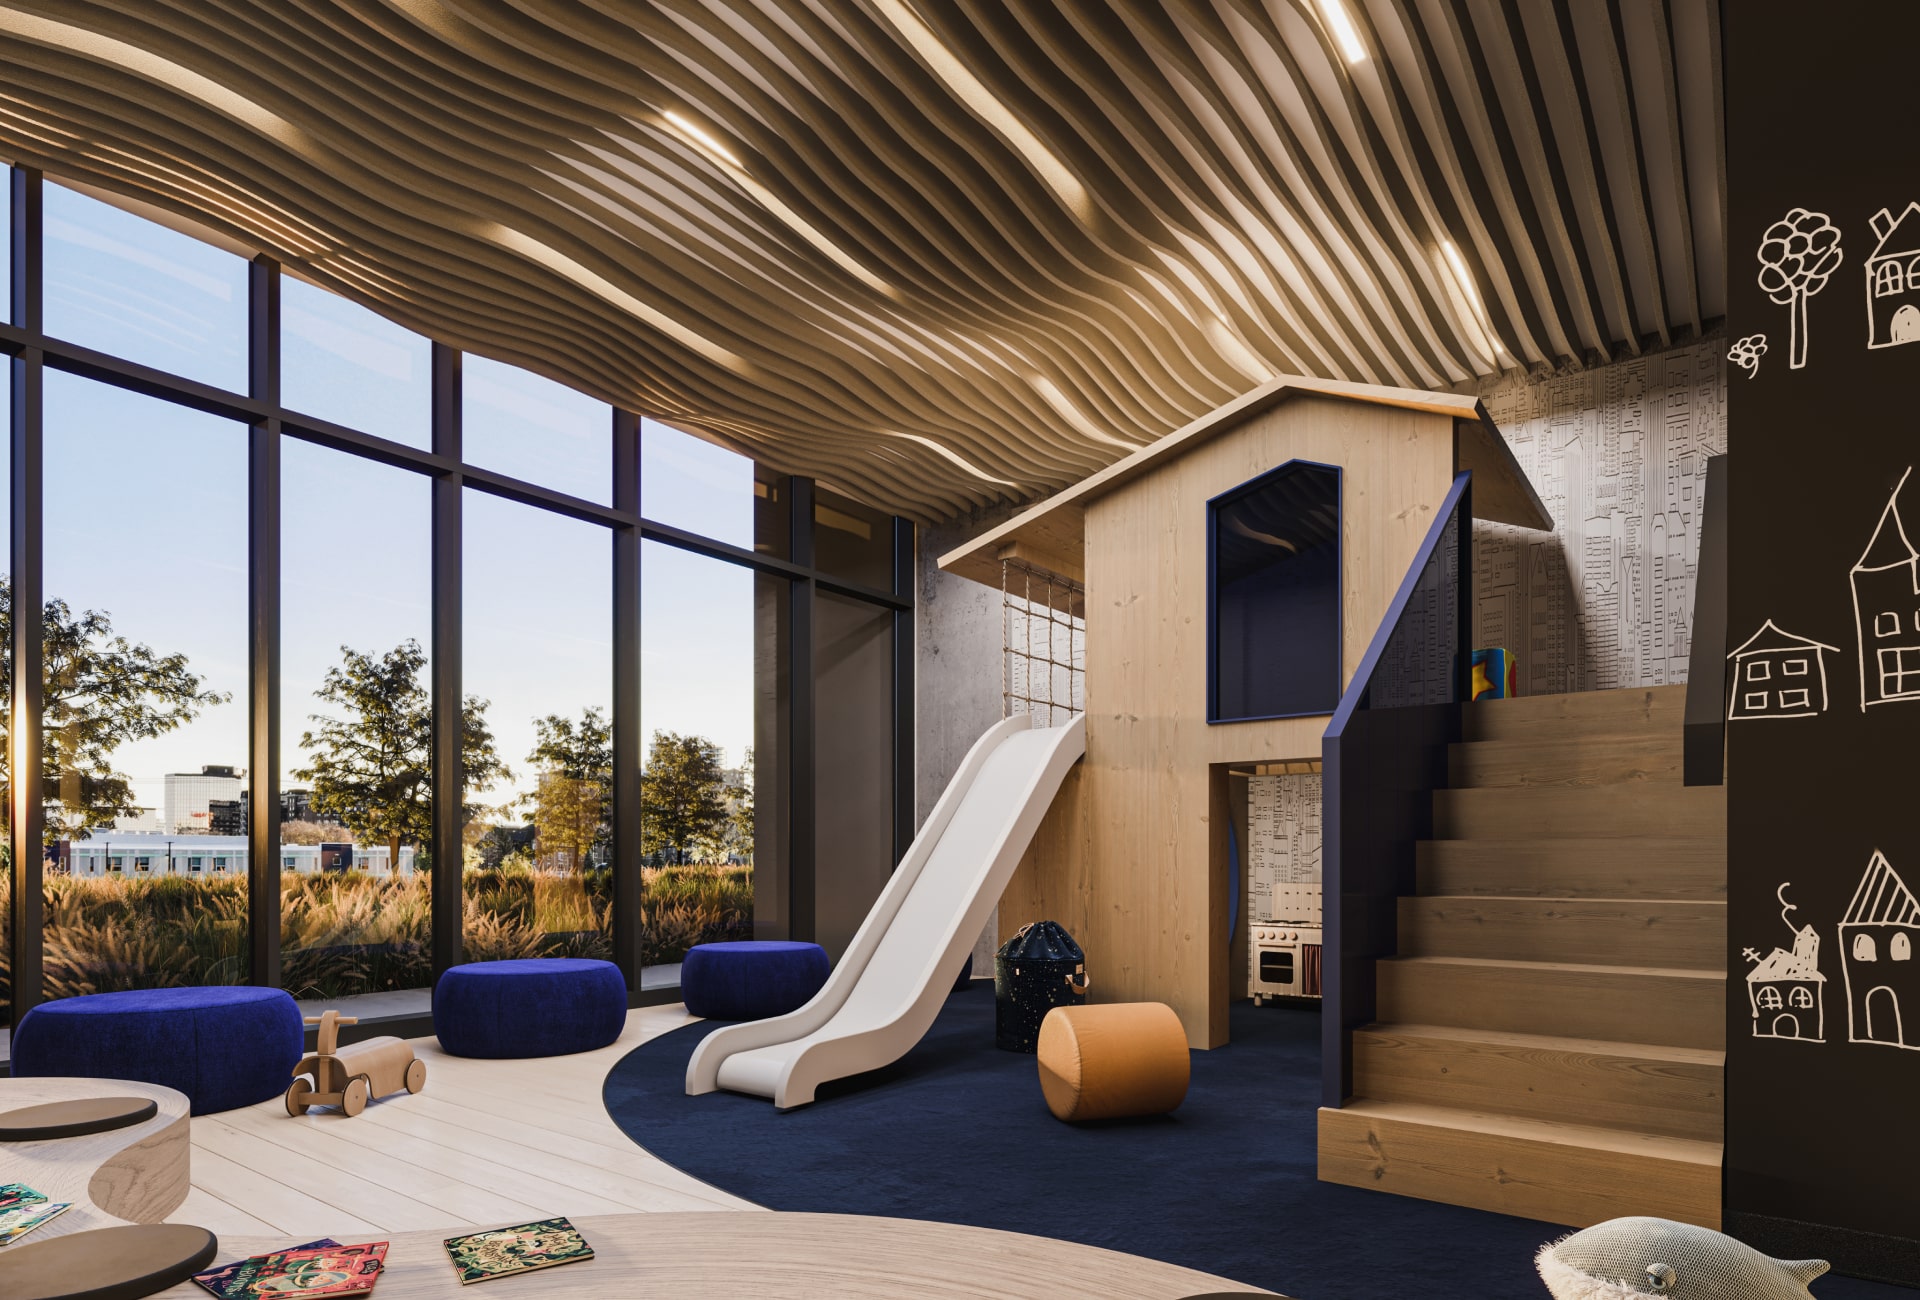 Mostra Centropolis laval apartments for lease rental condos children park